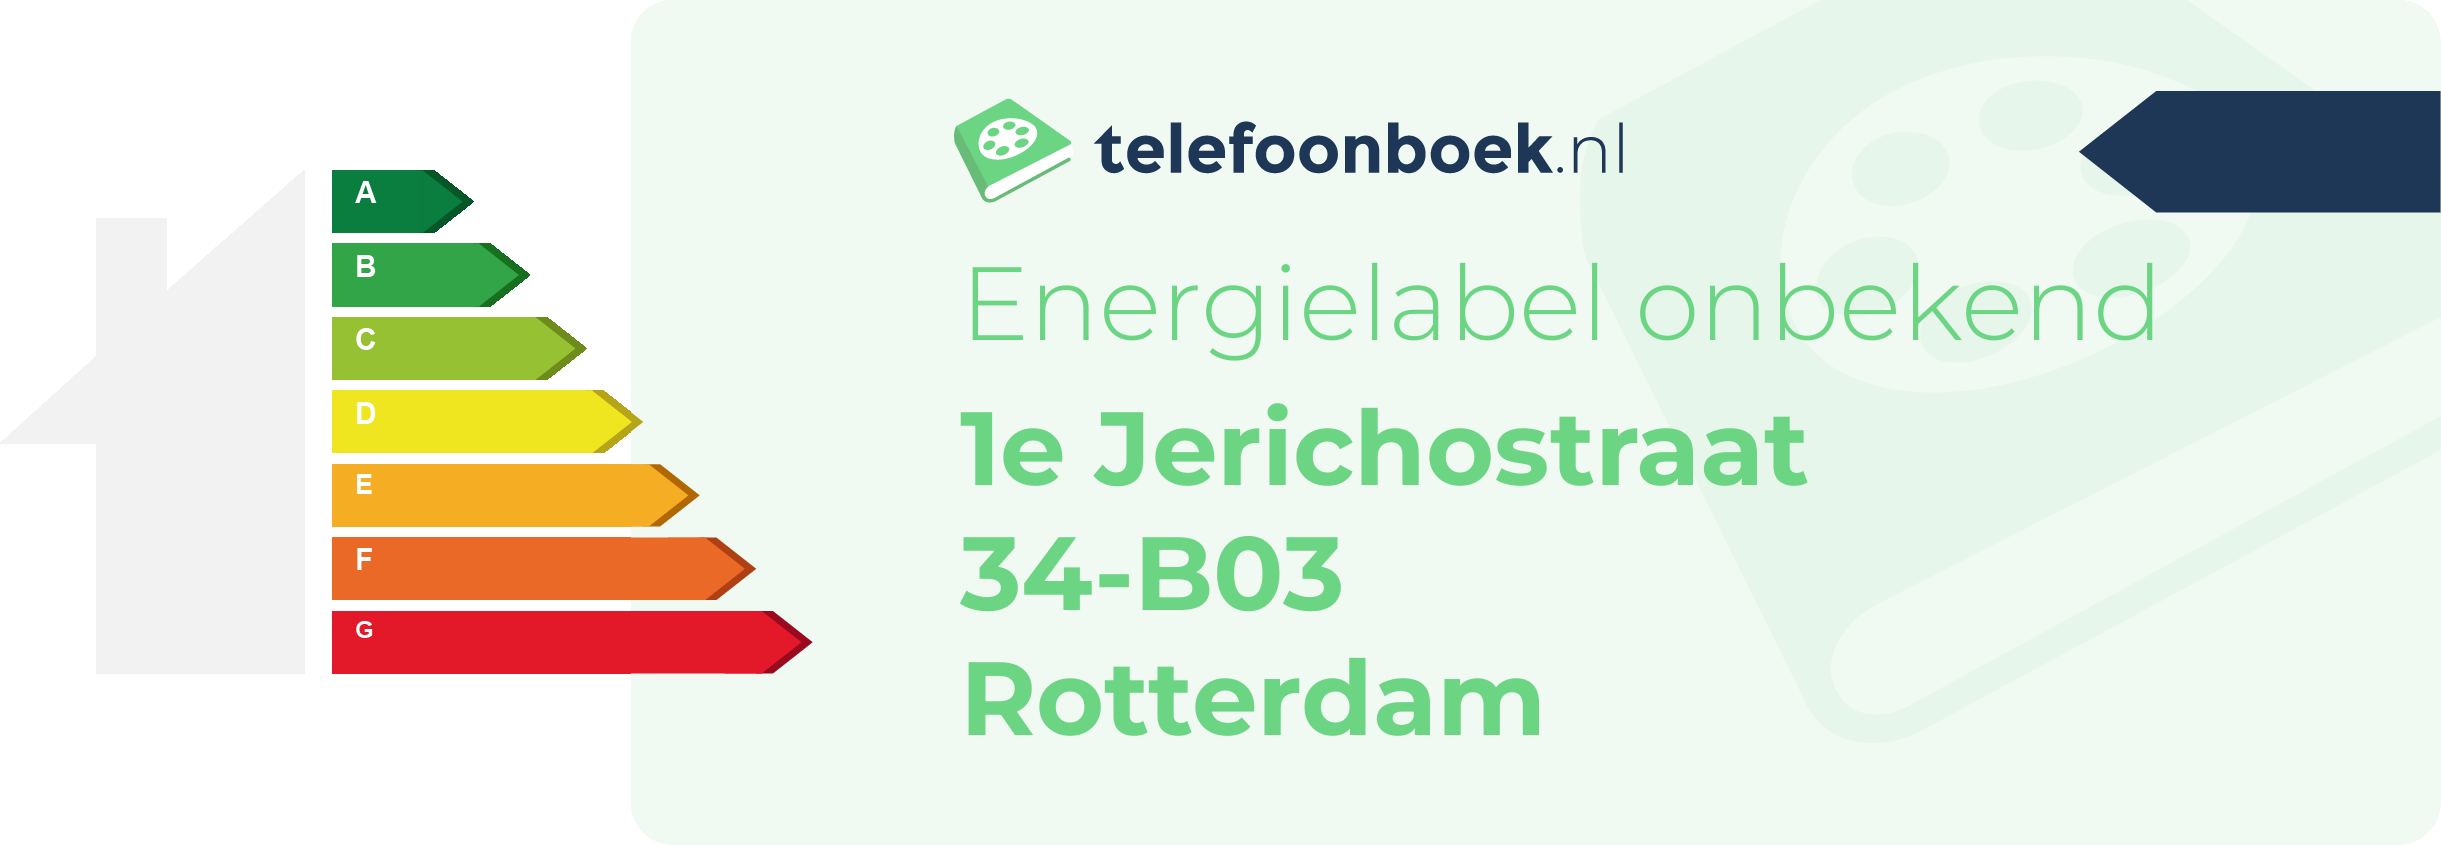 Energielabel 1e Jerichostraat 34-B03 Rotterdam